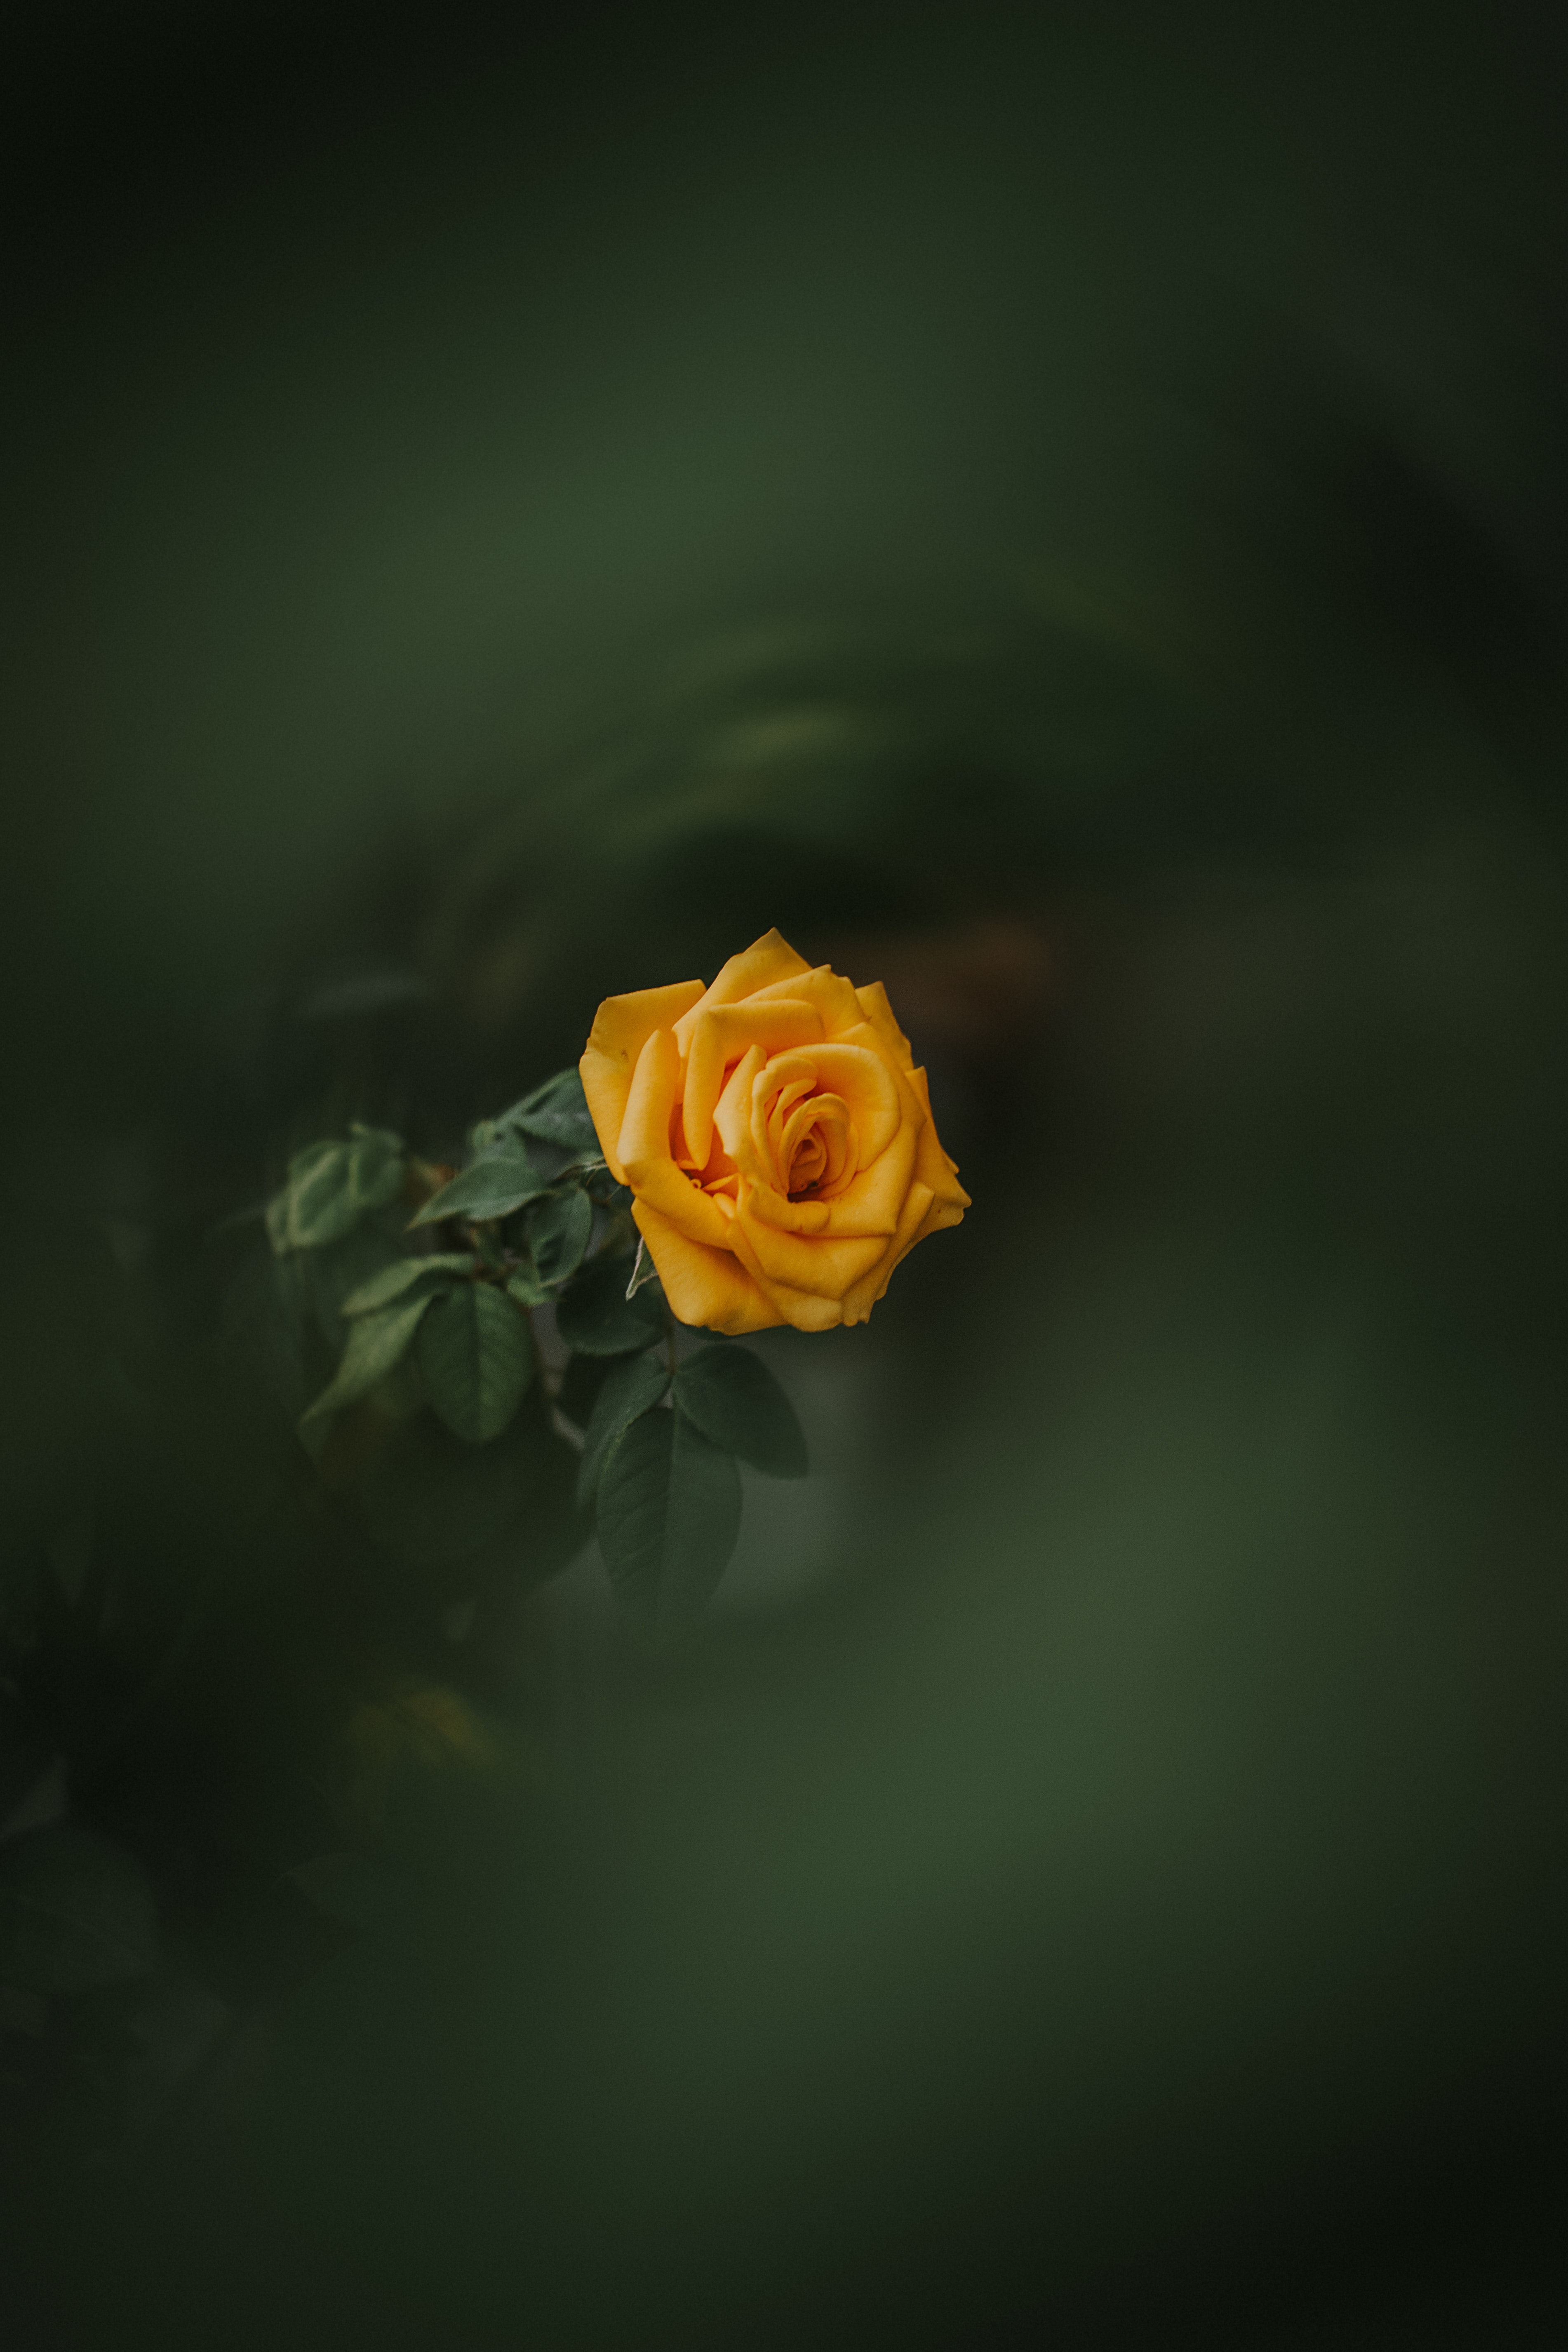 rose, rose flower, green, flowers, yellow, bud, blur, smooth, garden 32K